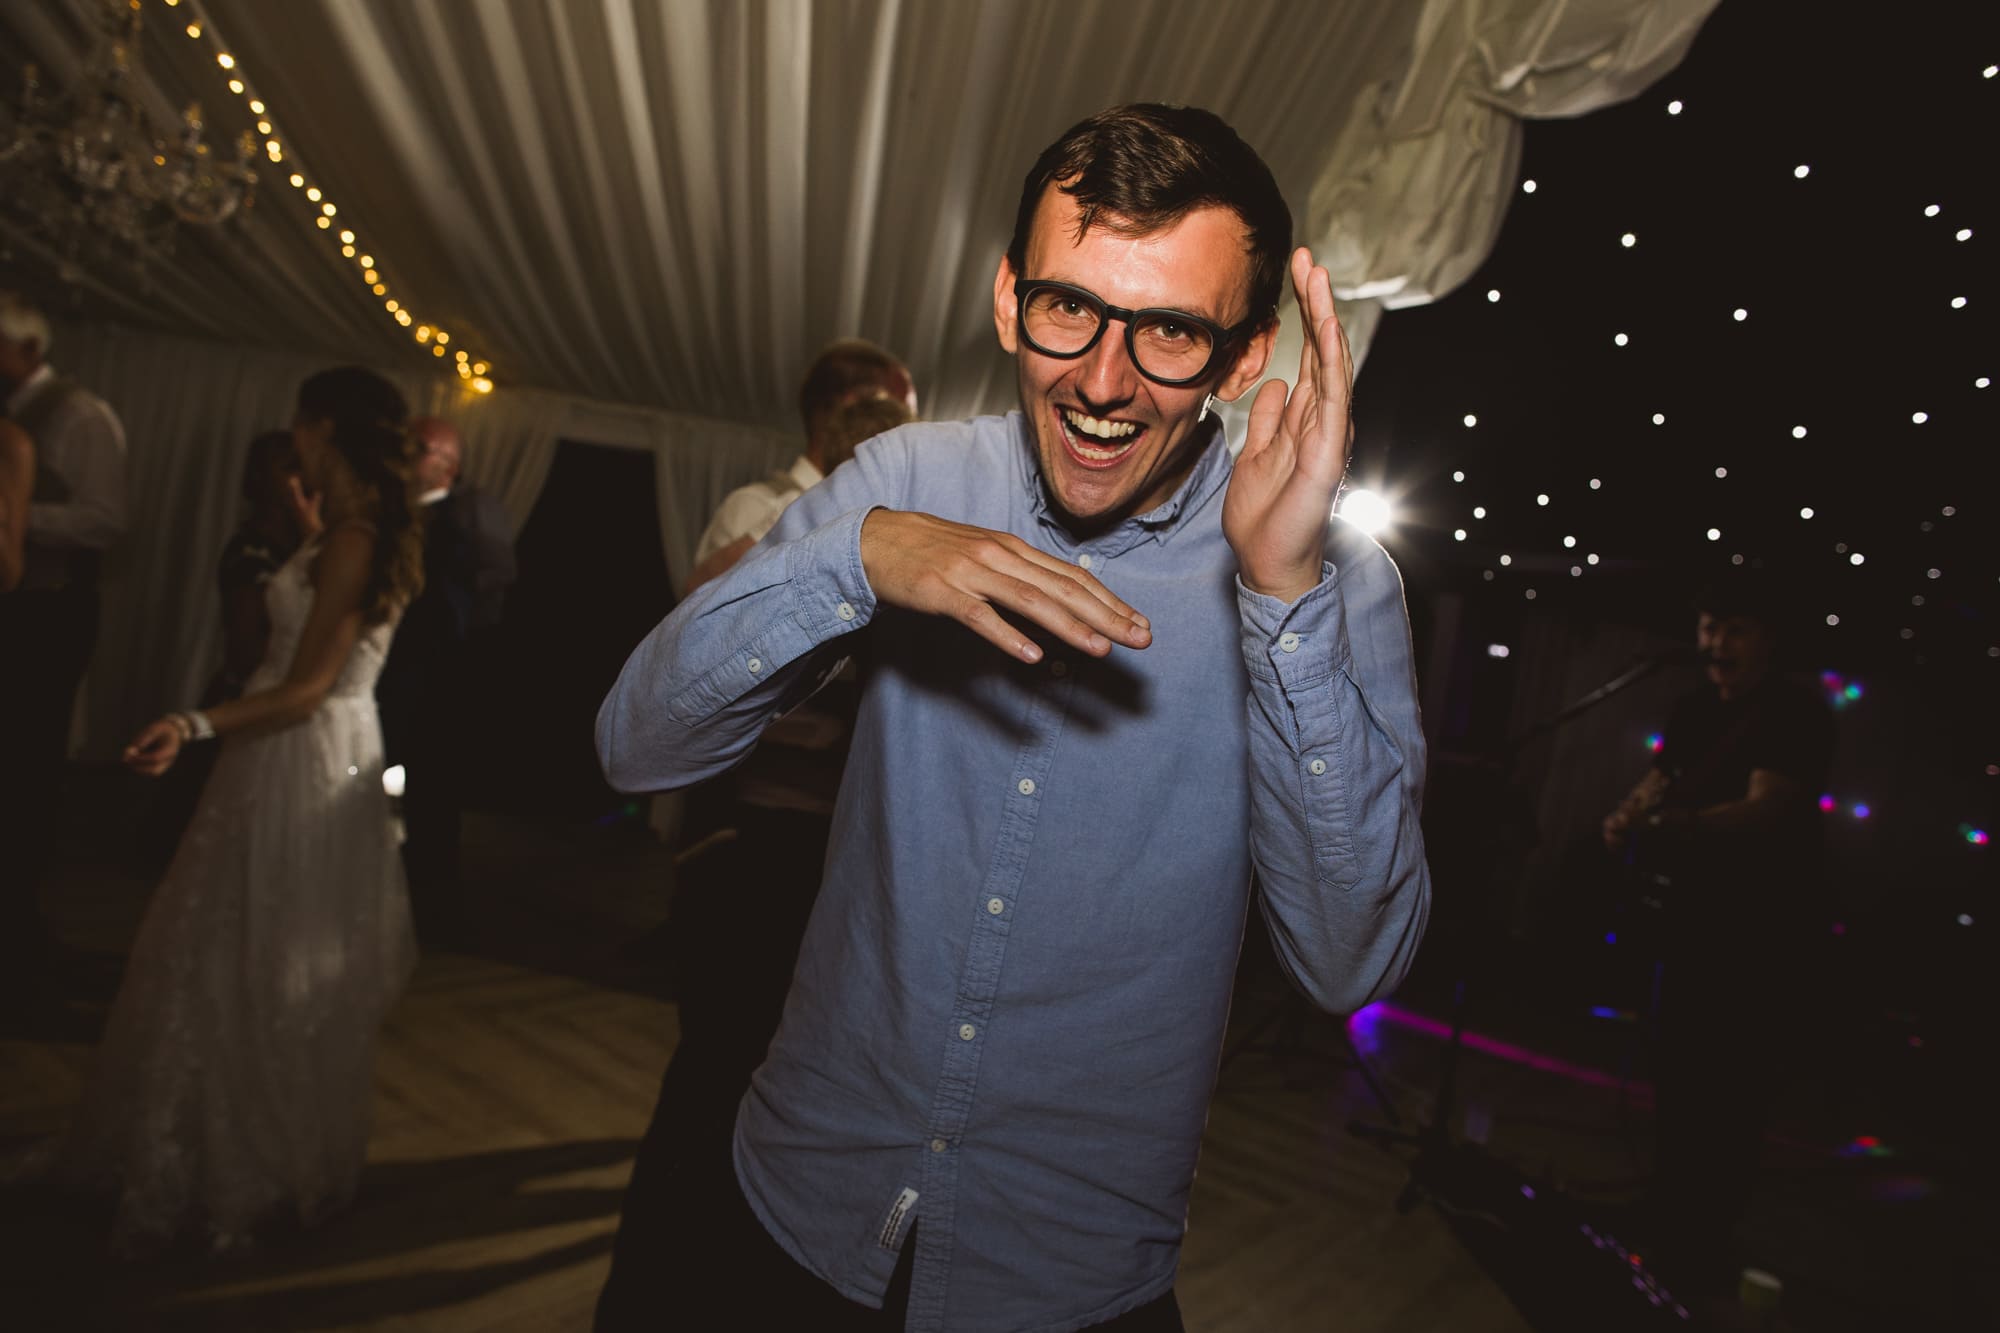 dancing at glemham hall wedding reception